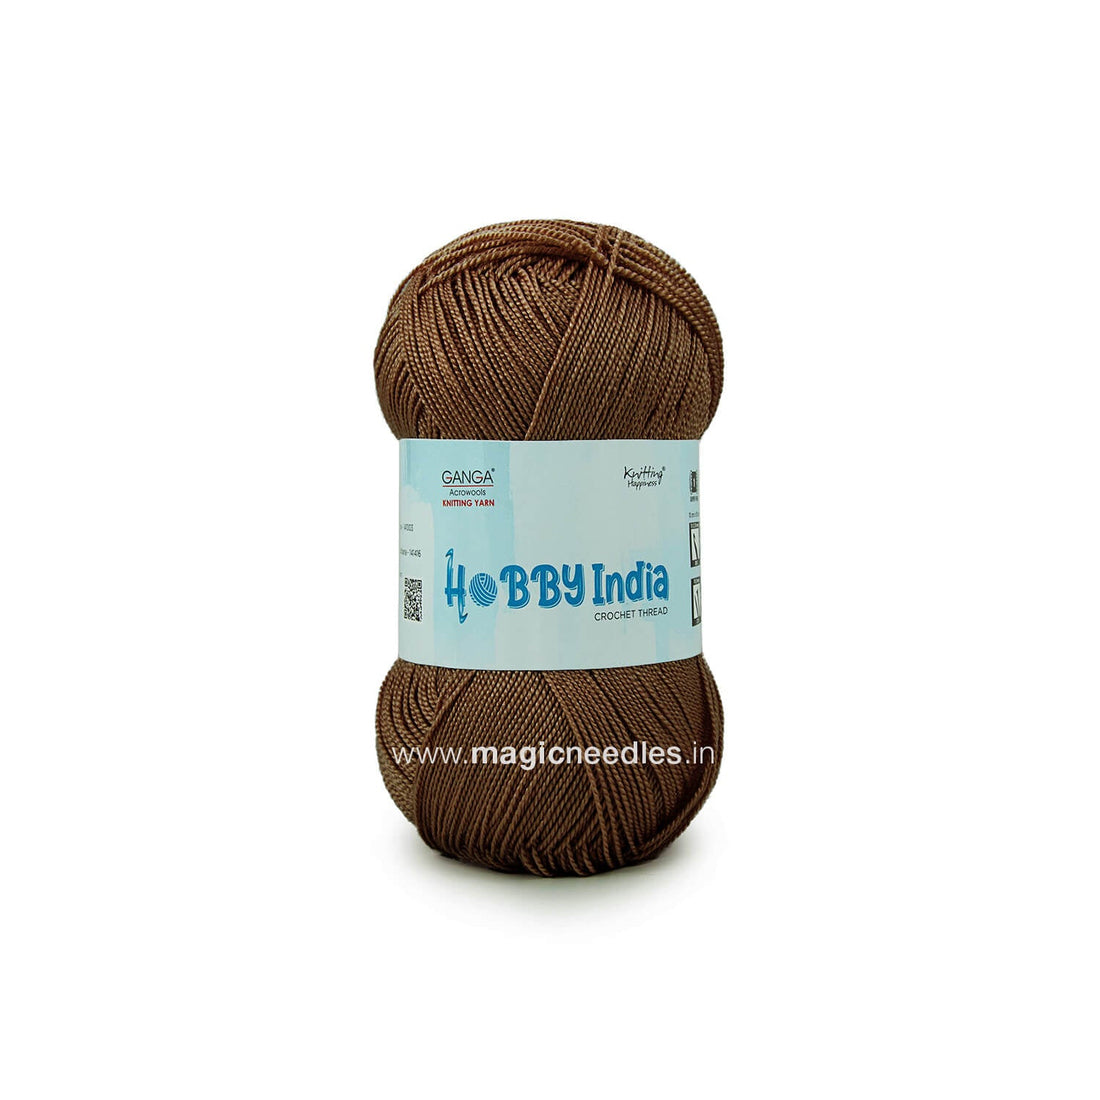 Ganga Hobby India Crochet Thread - Dark Brown 80